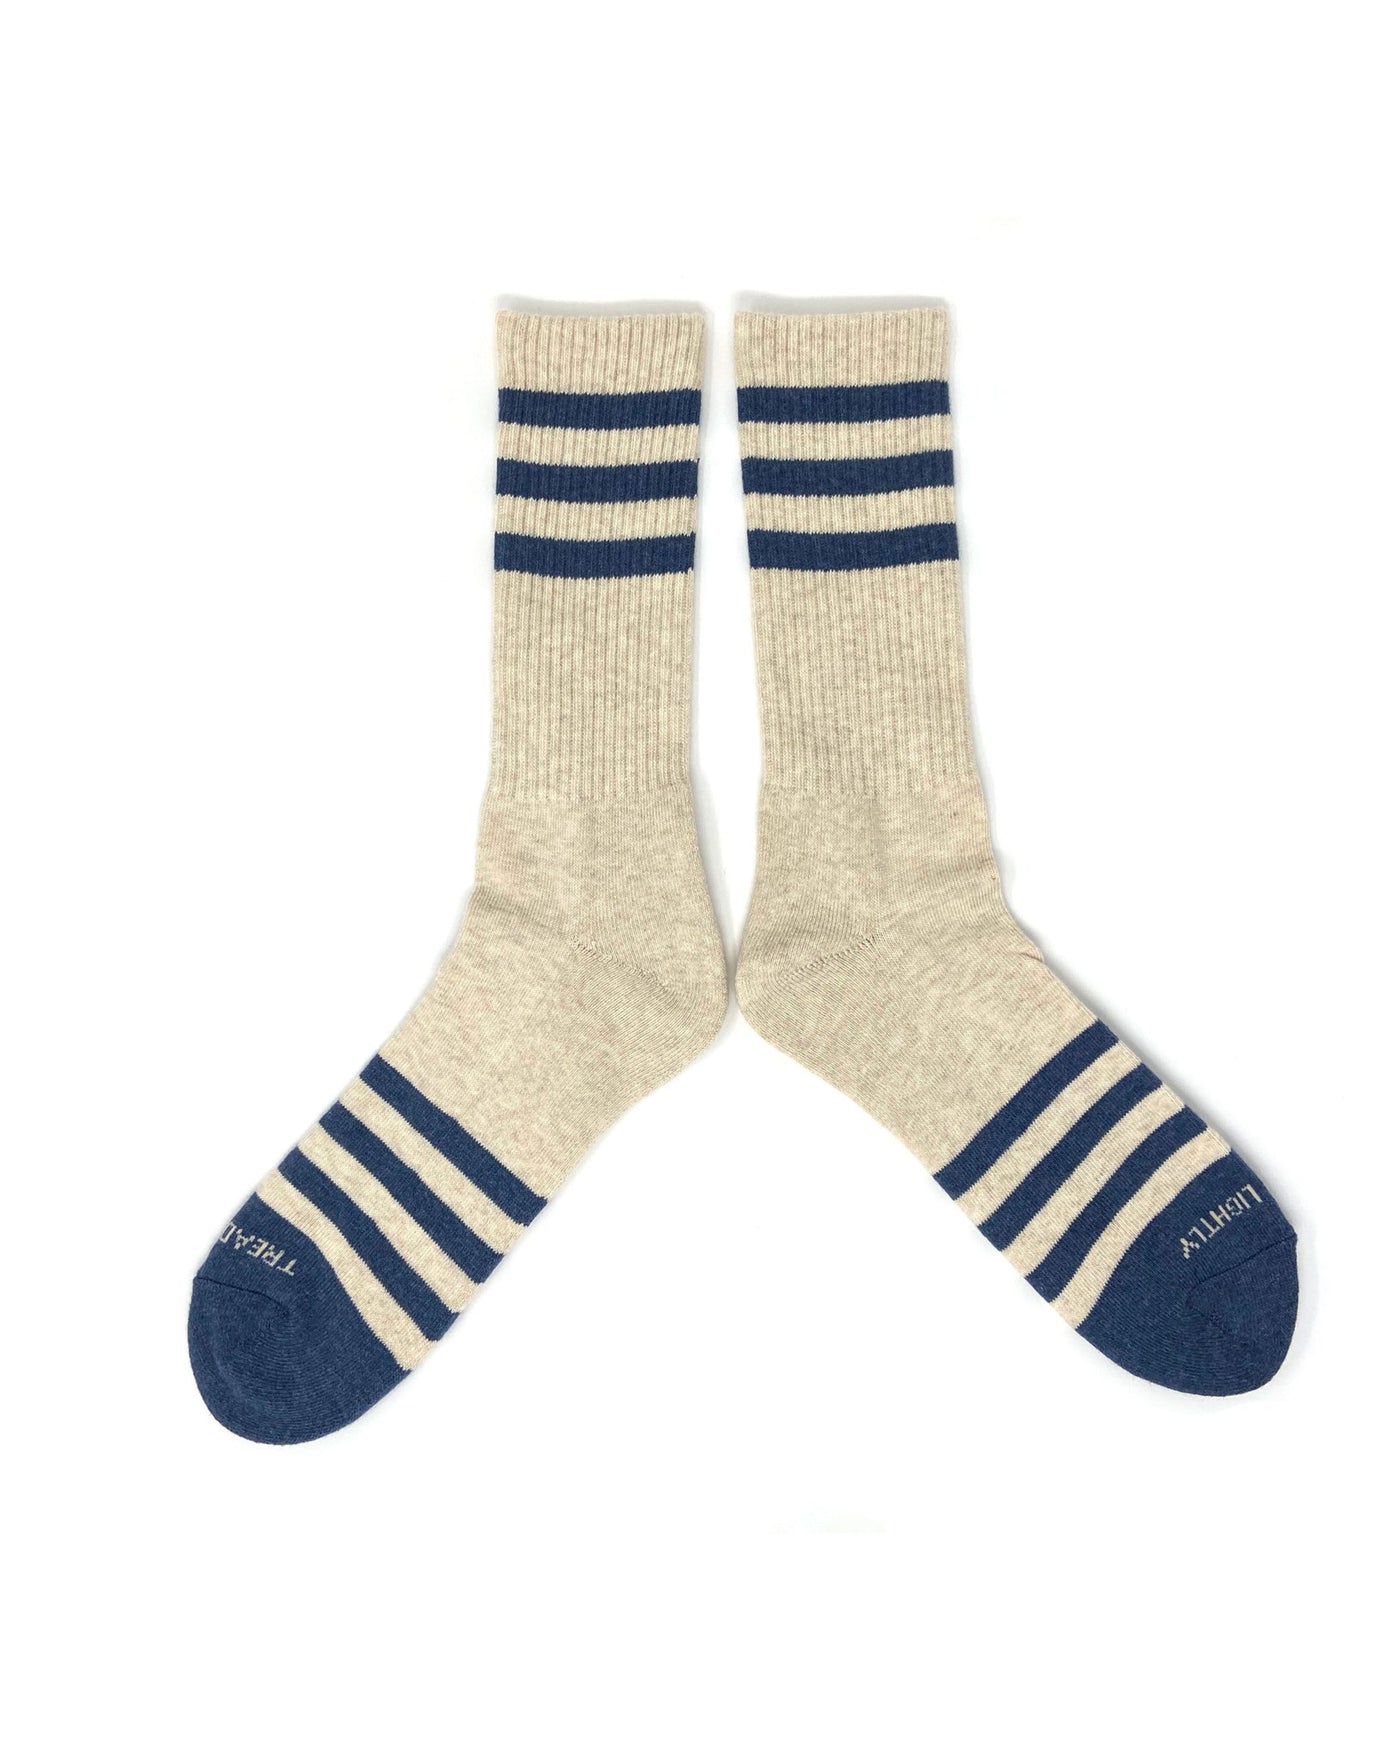 T.A.C Socks Heather Stripes - Cream/Navy